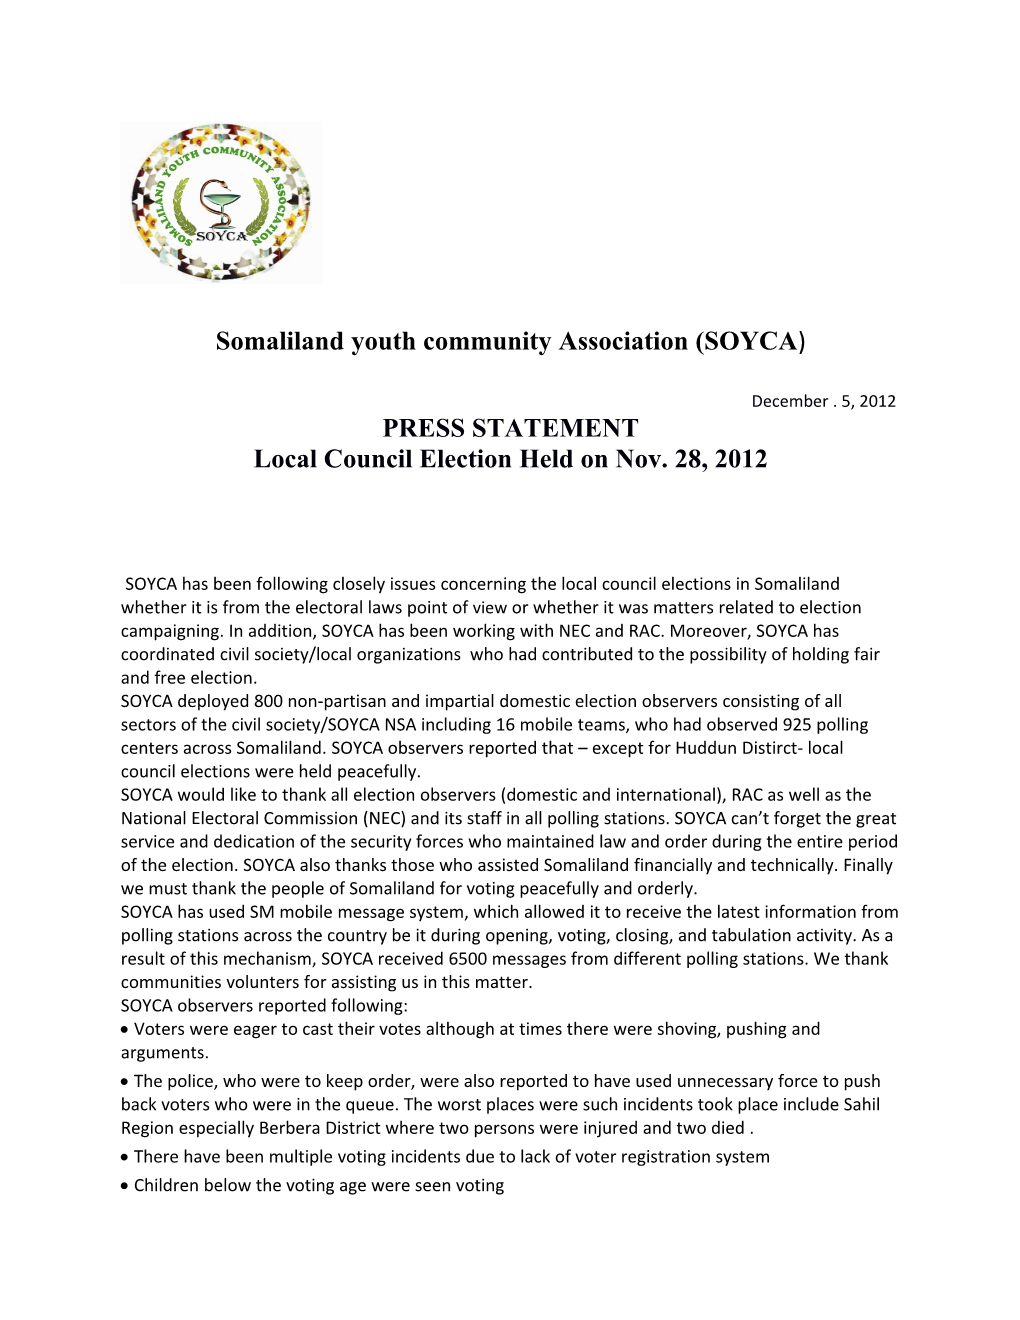 Somaliland Youth Community Association (SOYCA)